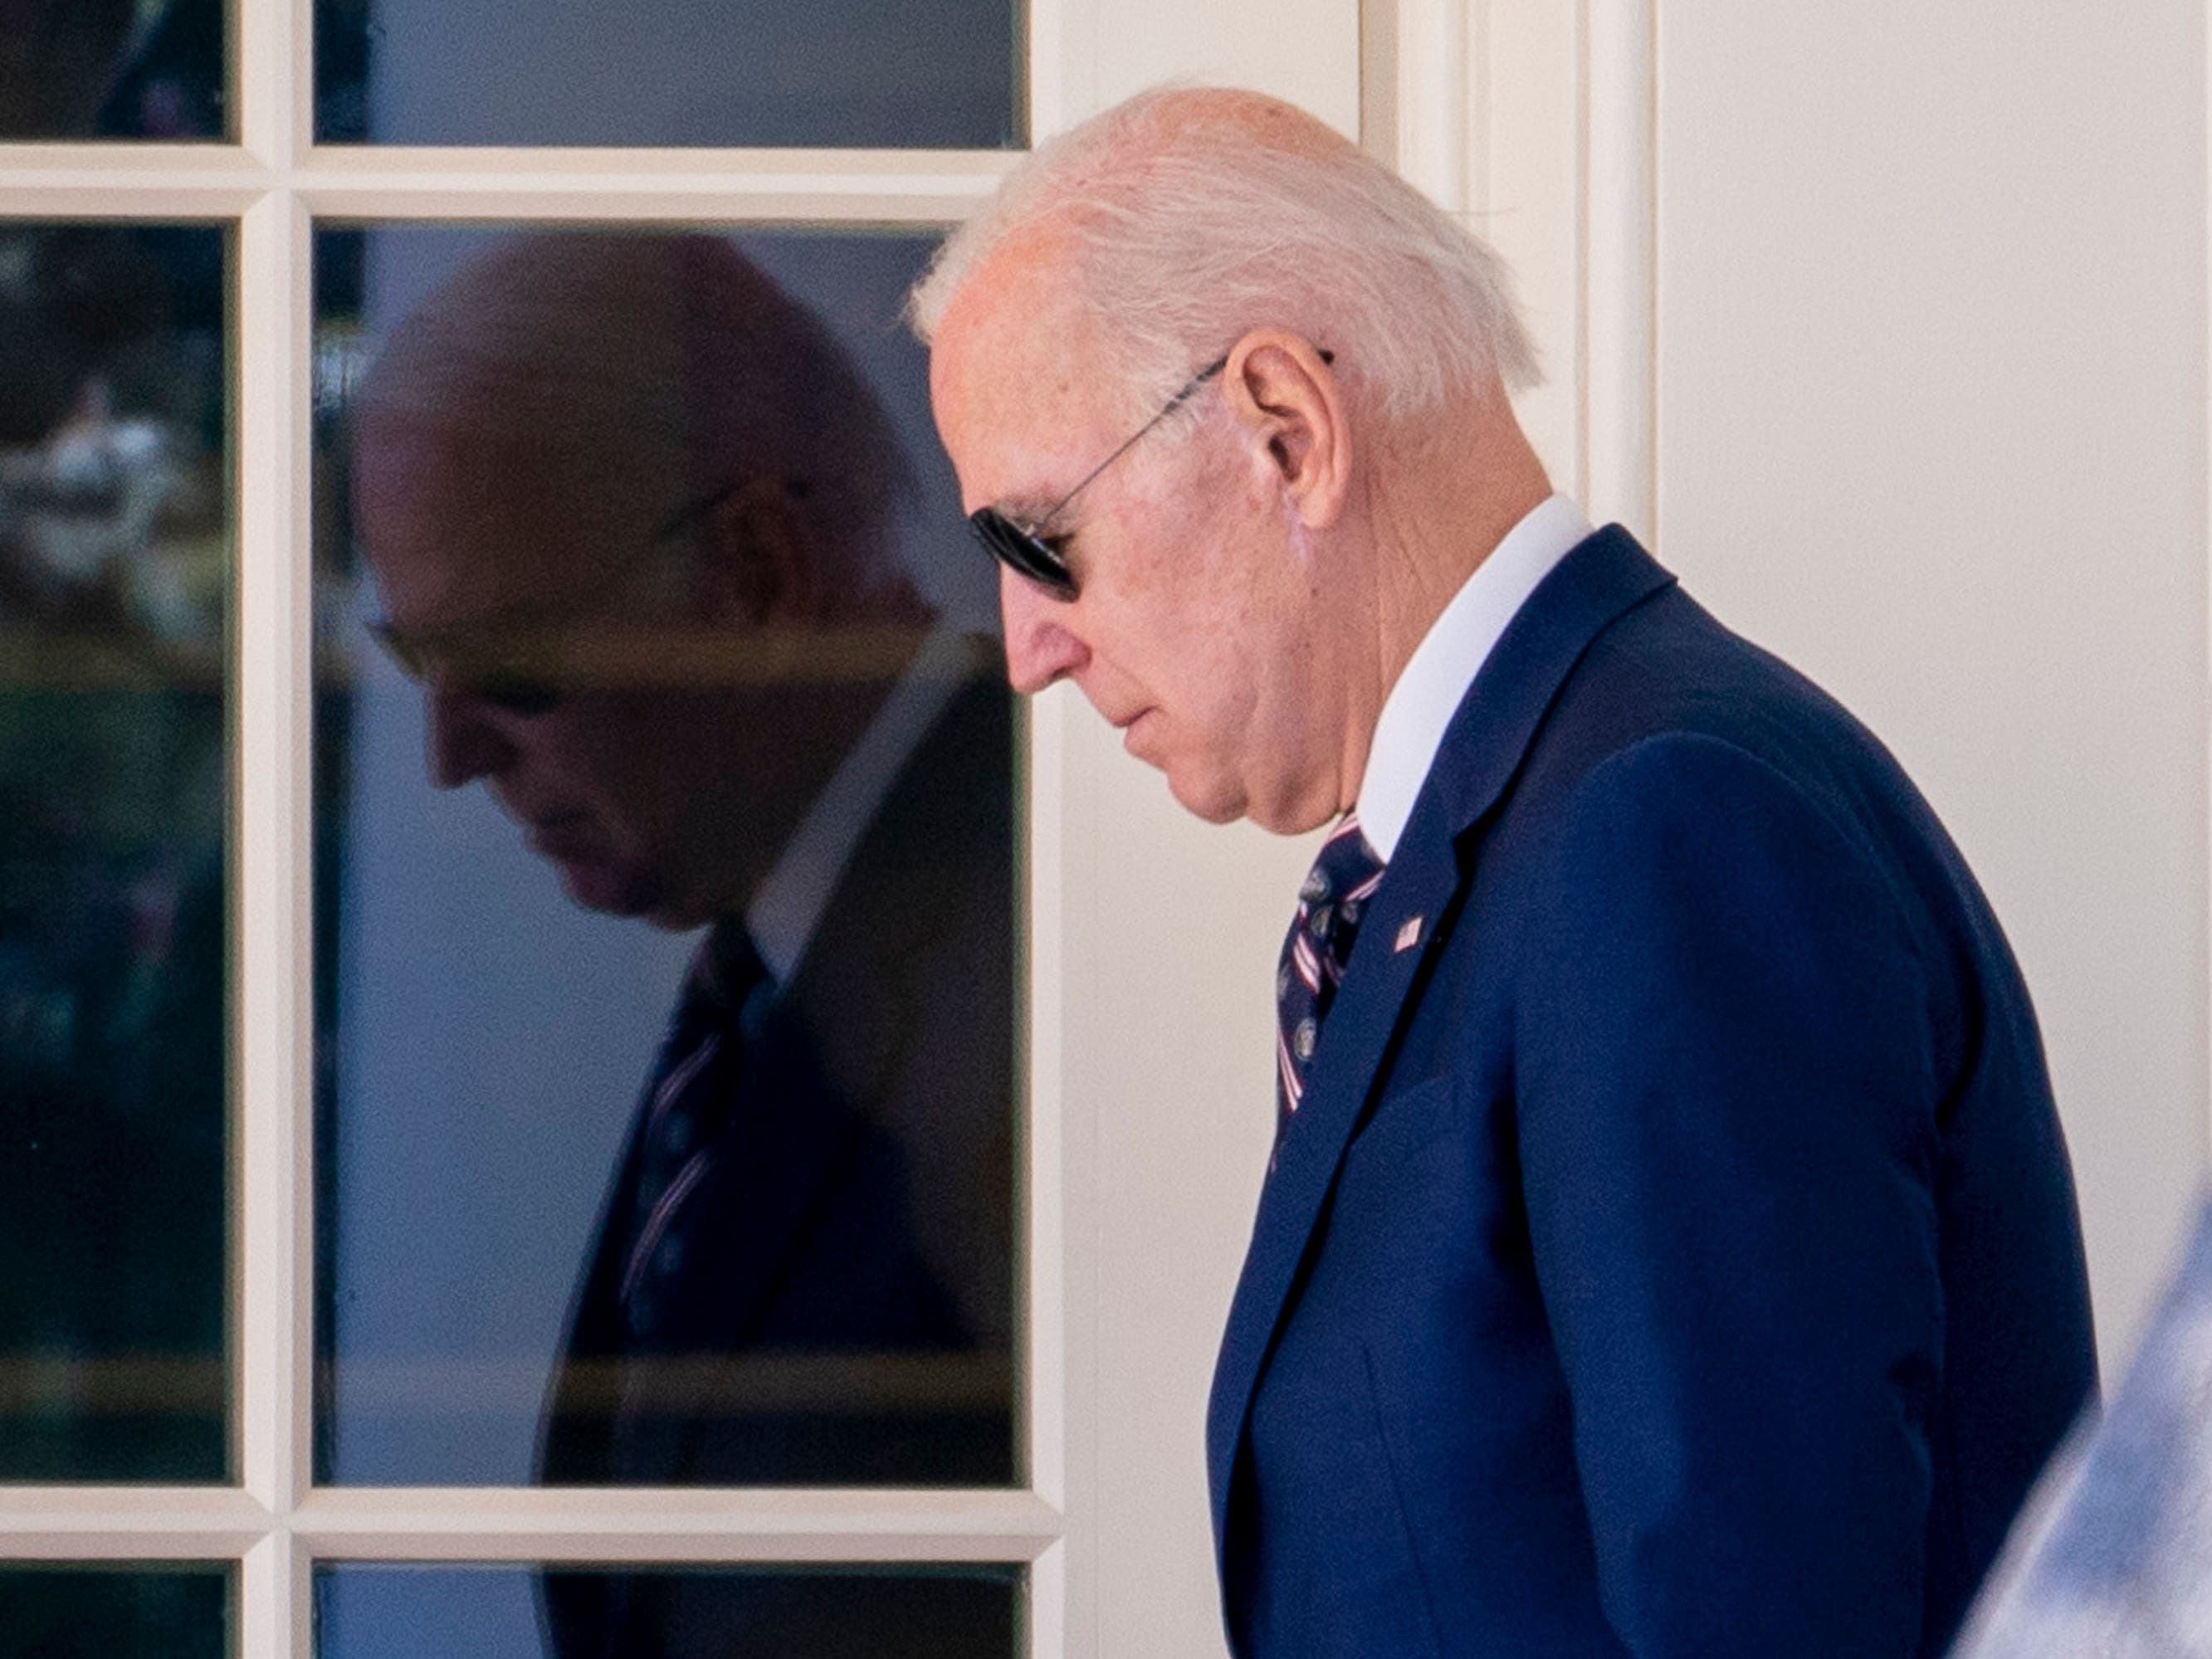 Democrats hail Biden’s decision not to seek re-election as selfless